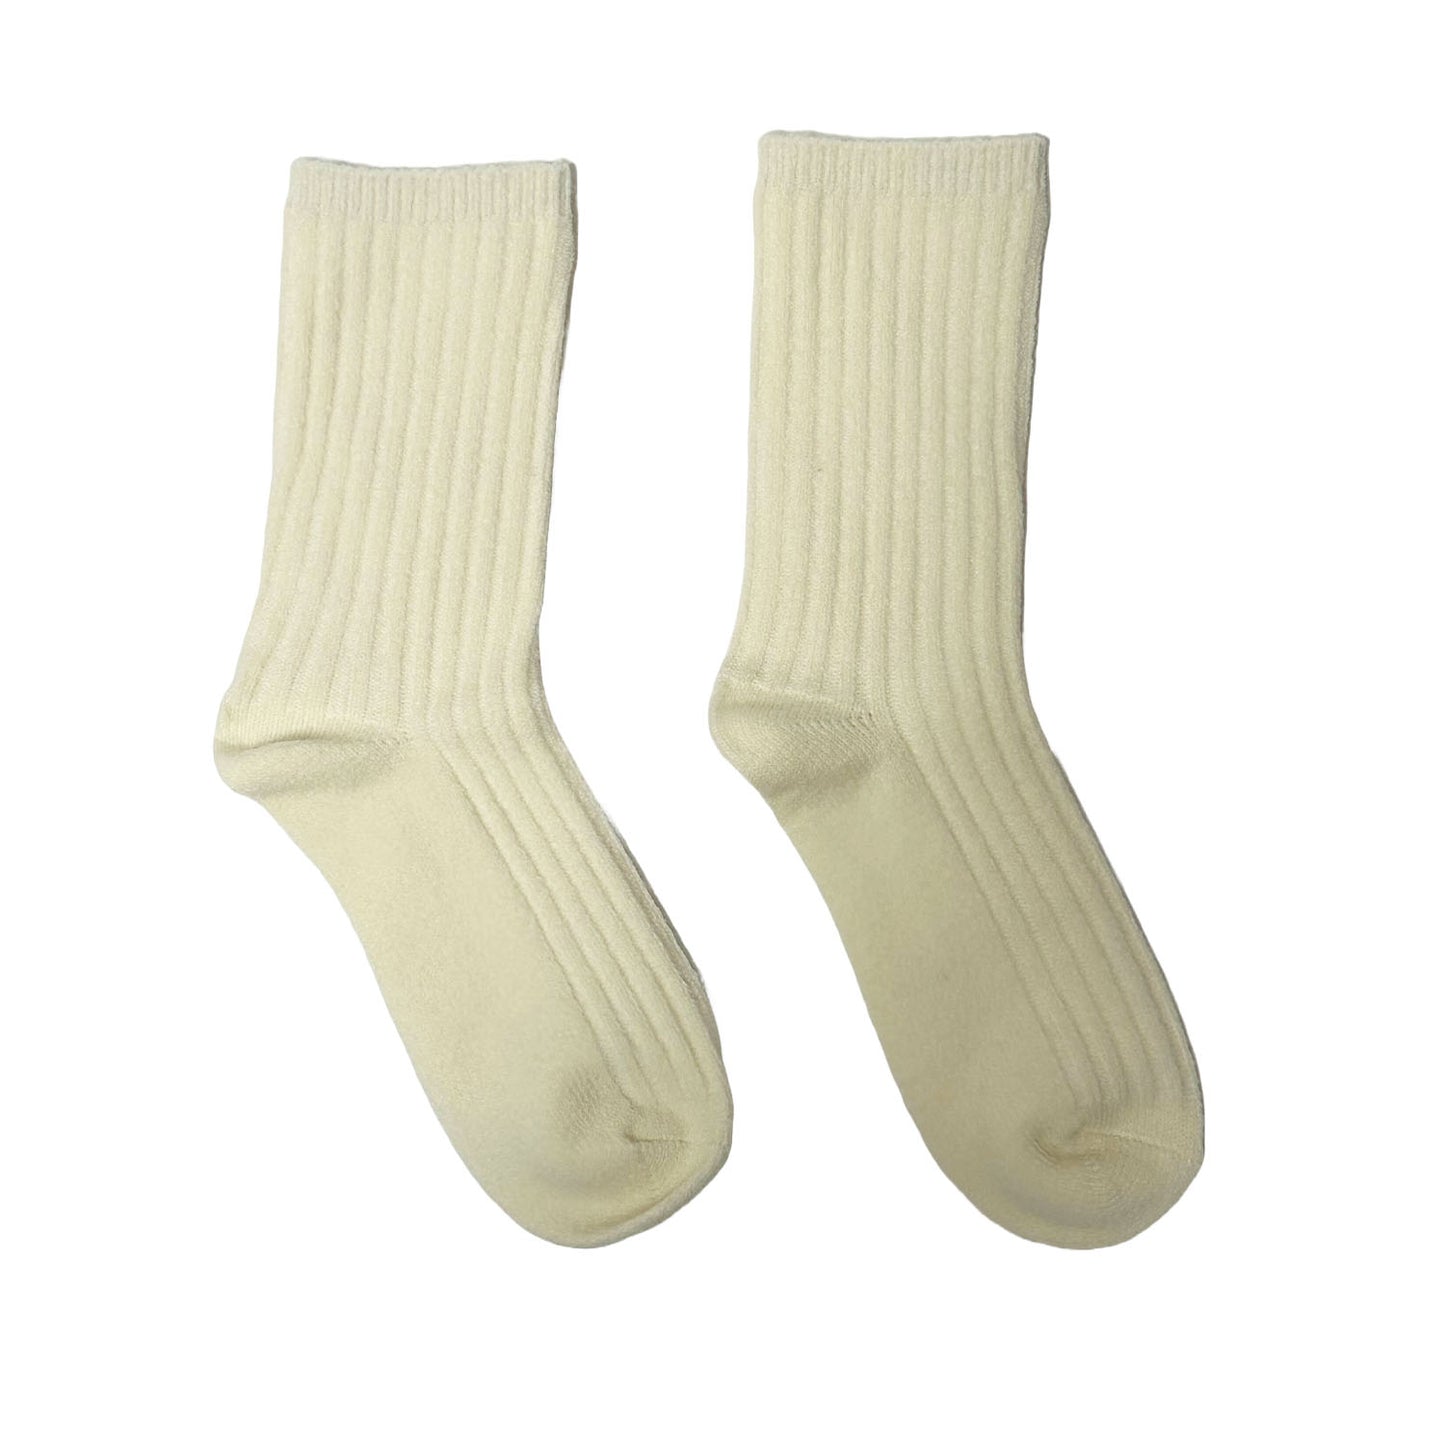 FLOOF Women's Wool Blend Socks in Cream